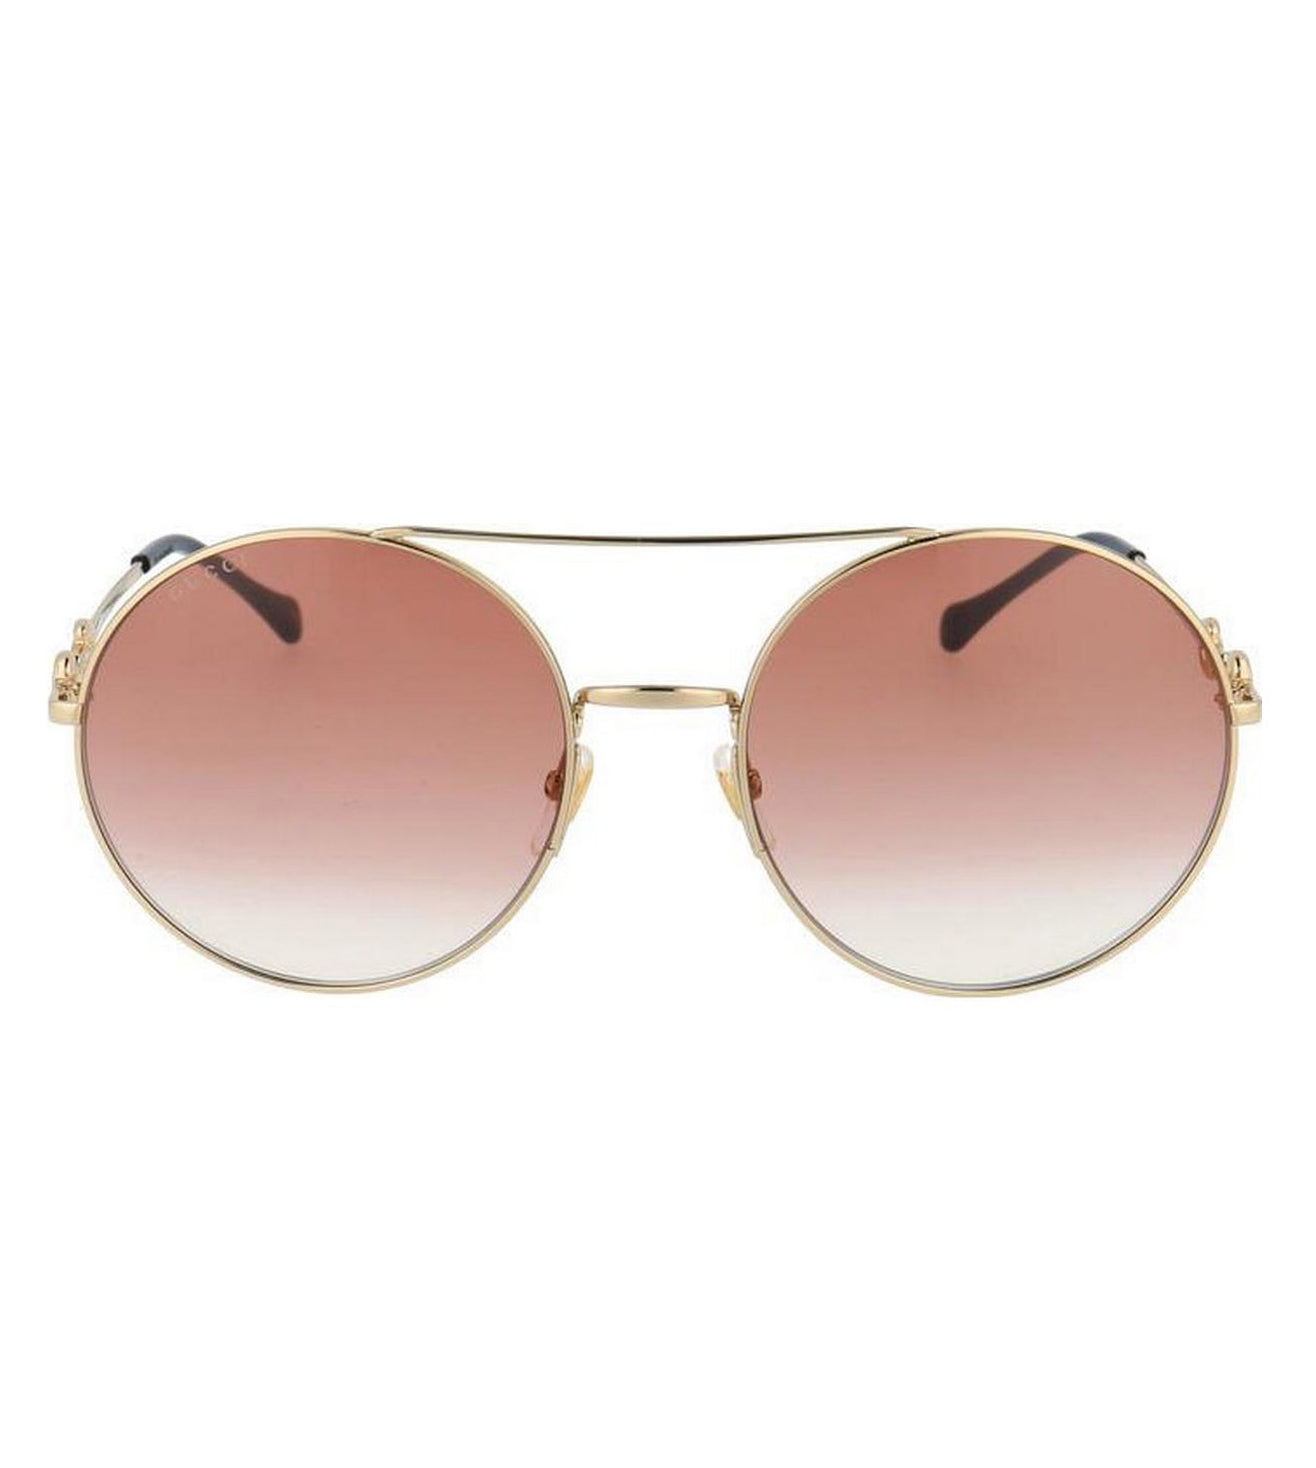 Gucci Women's Brown Aviator Sunglasses